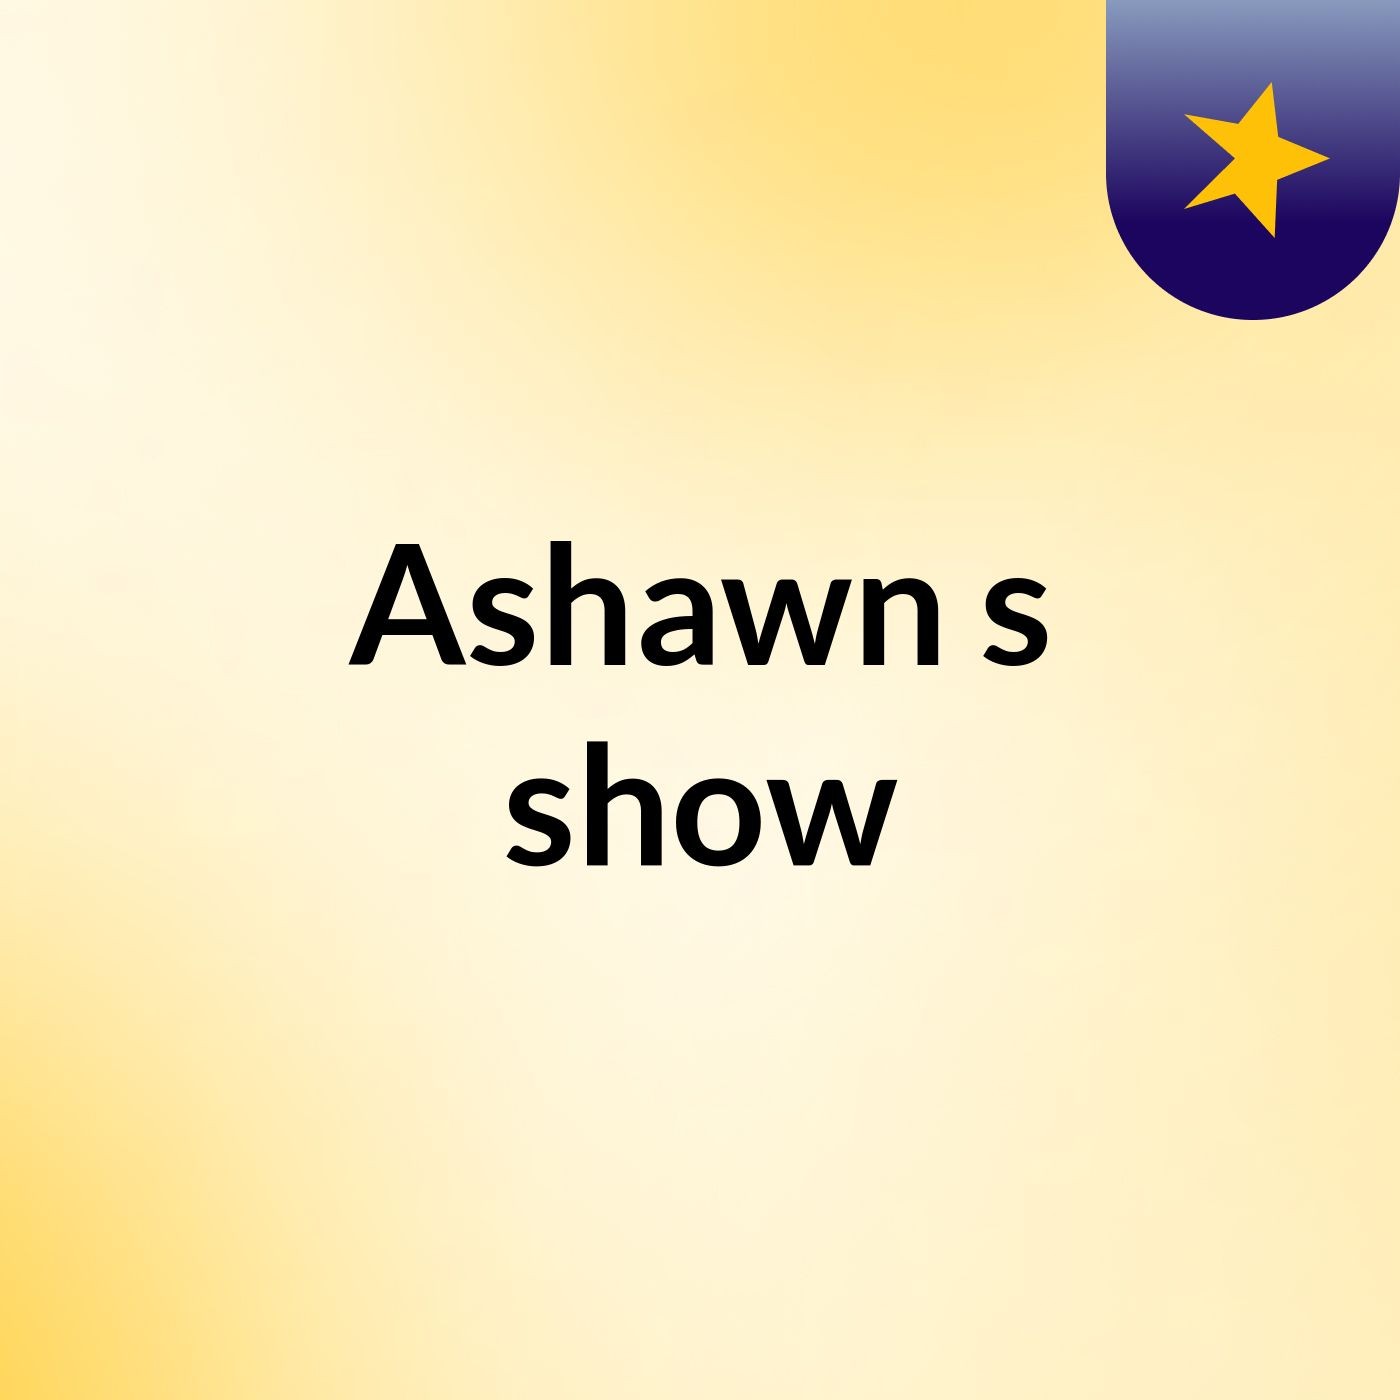 Ashawn's show